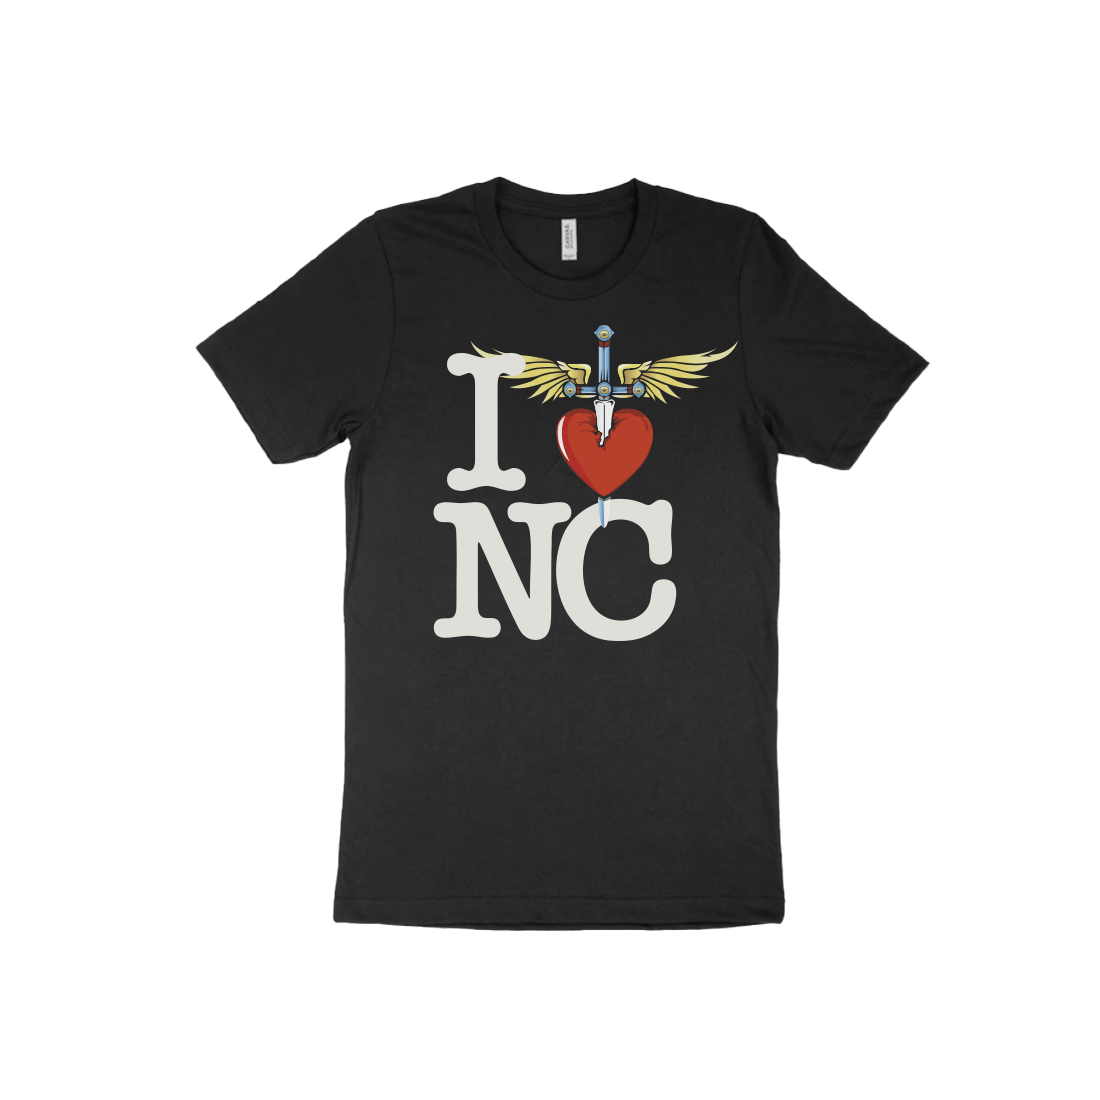 I Heart Black T-Shirt - NC